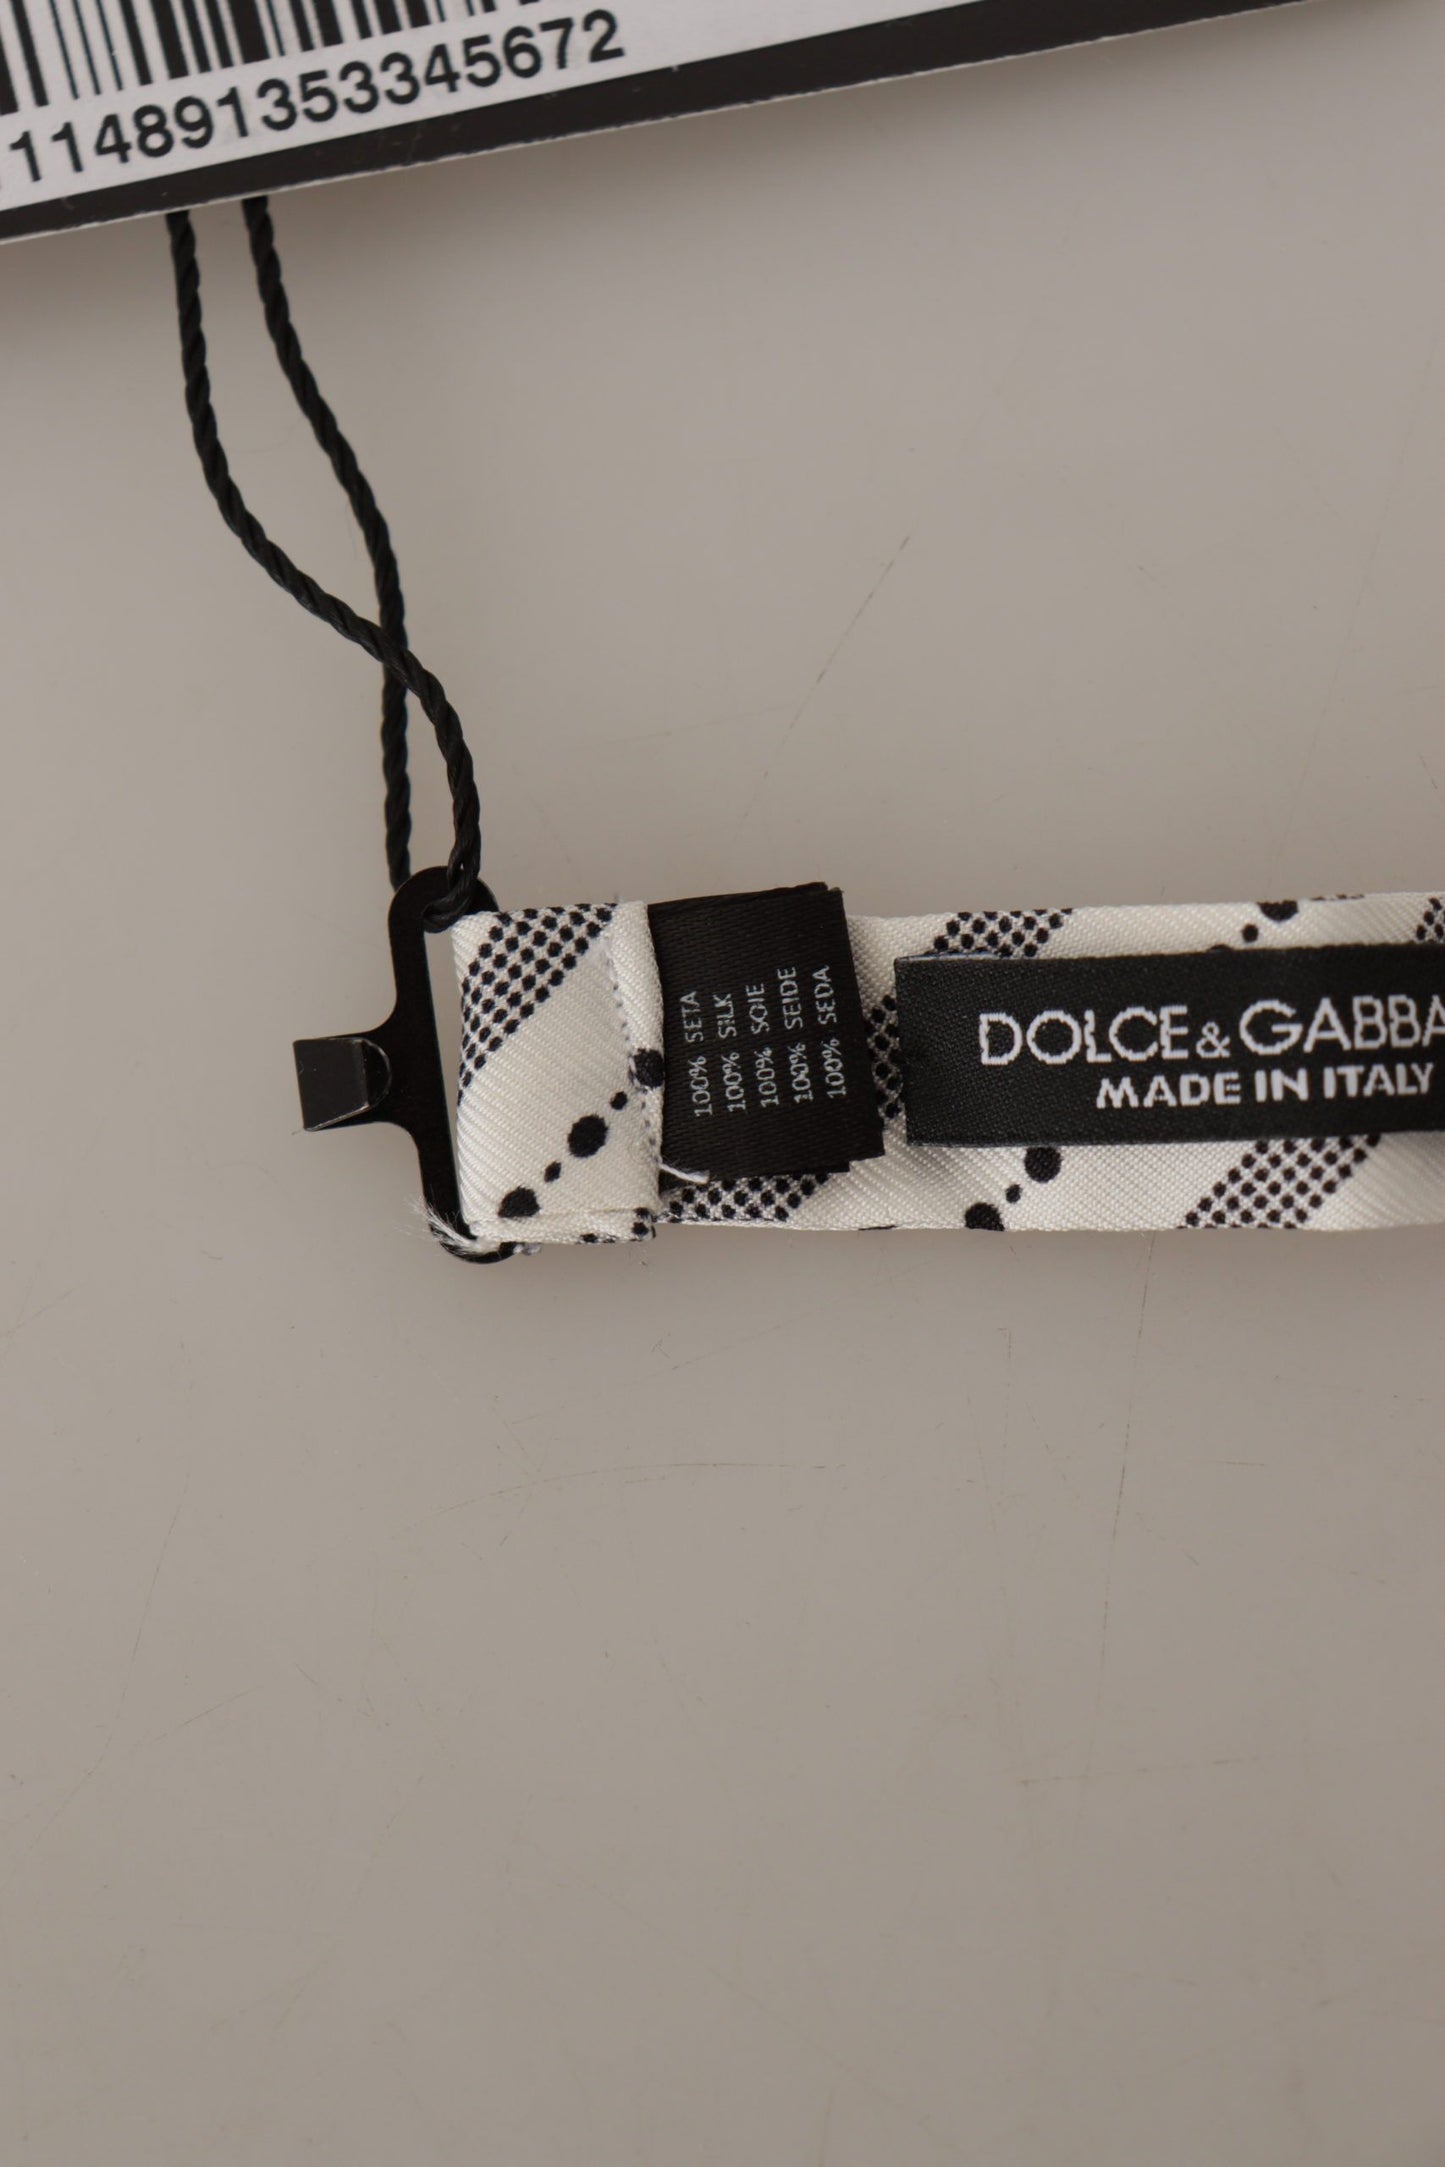 Dolce & Gabbana White Black Polka Dot 100% Silk Neck Papillon Bow Tie